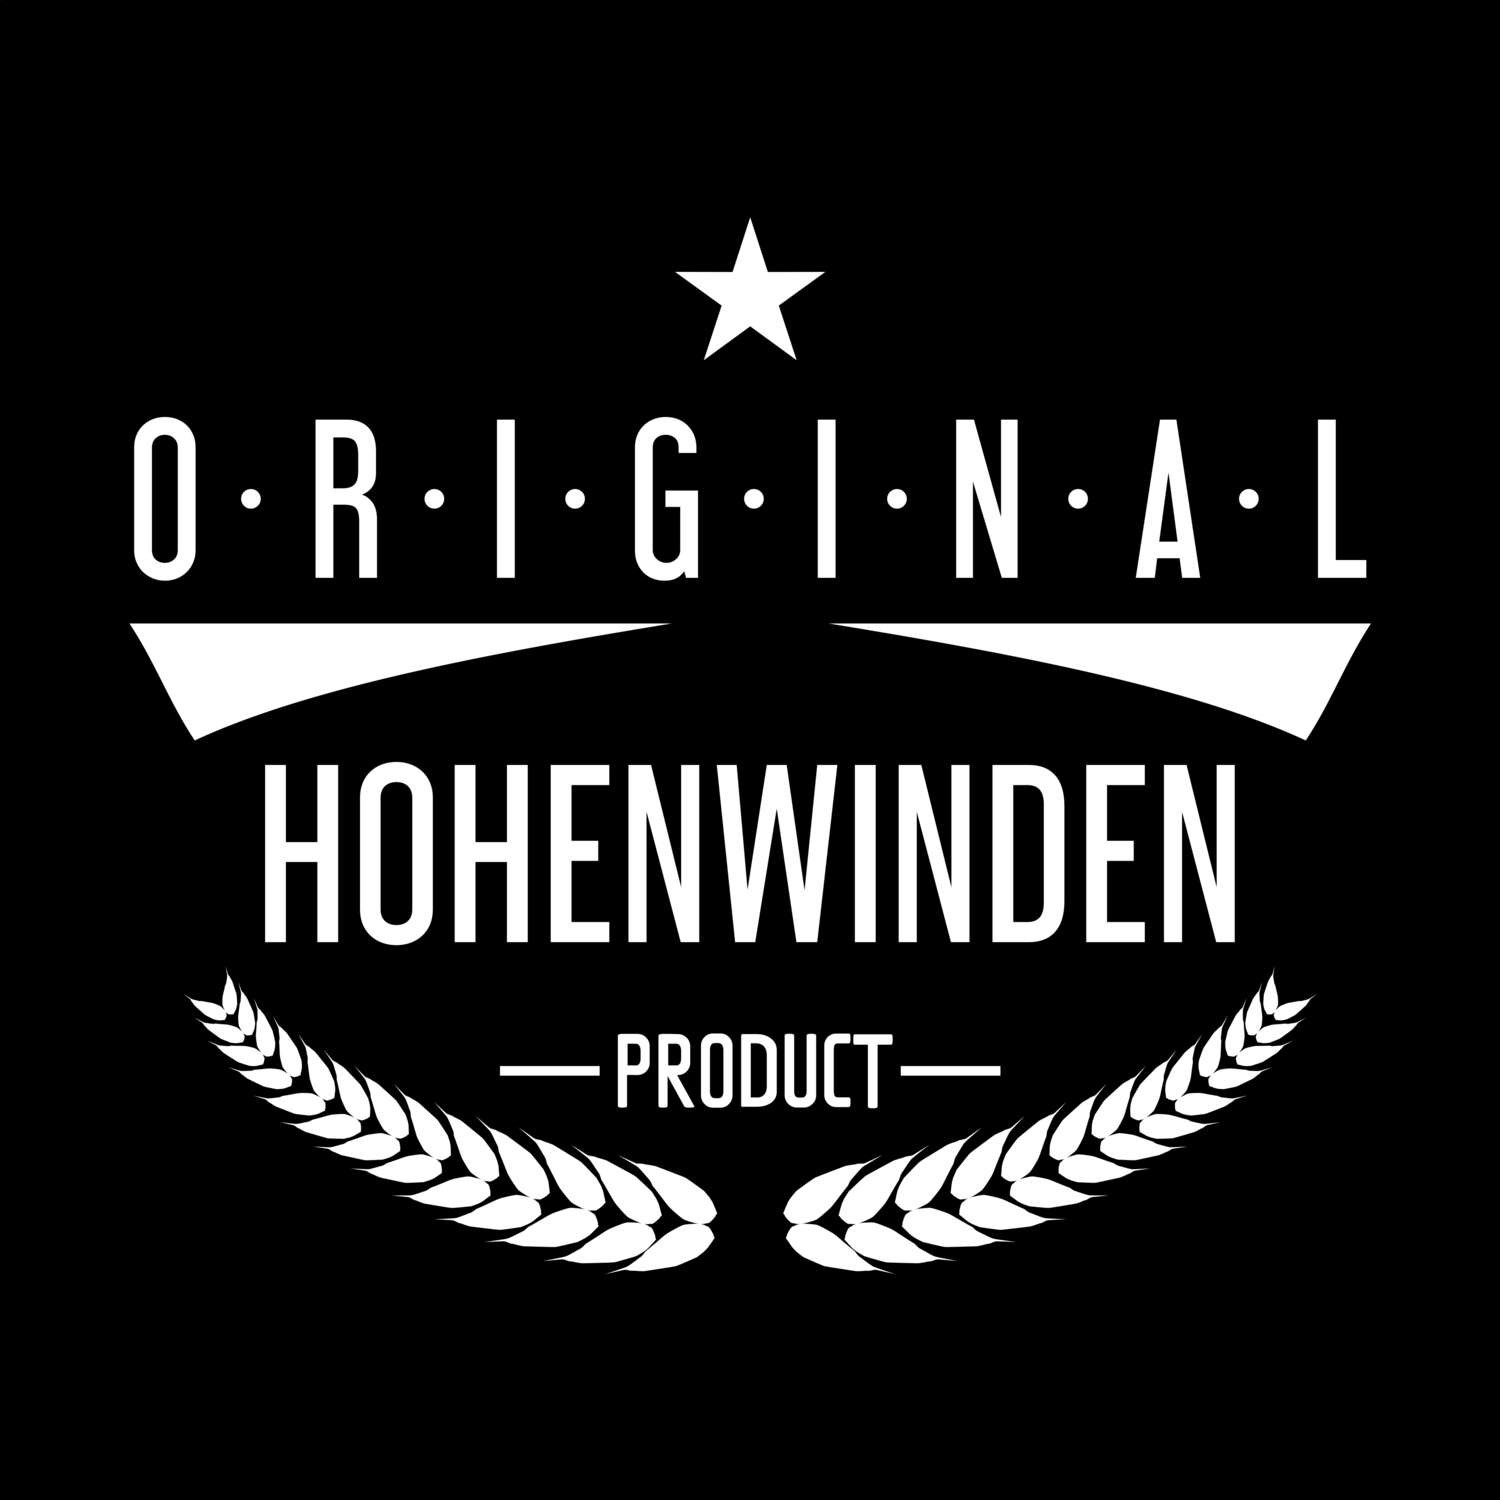 Hohenwinden T-Shirt »Original Product«